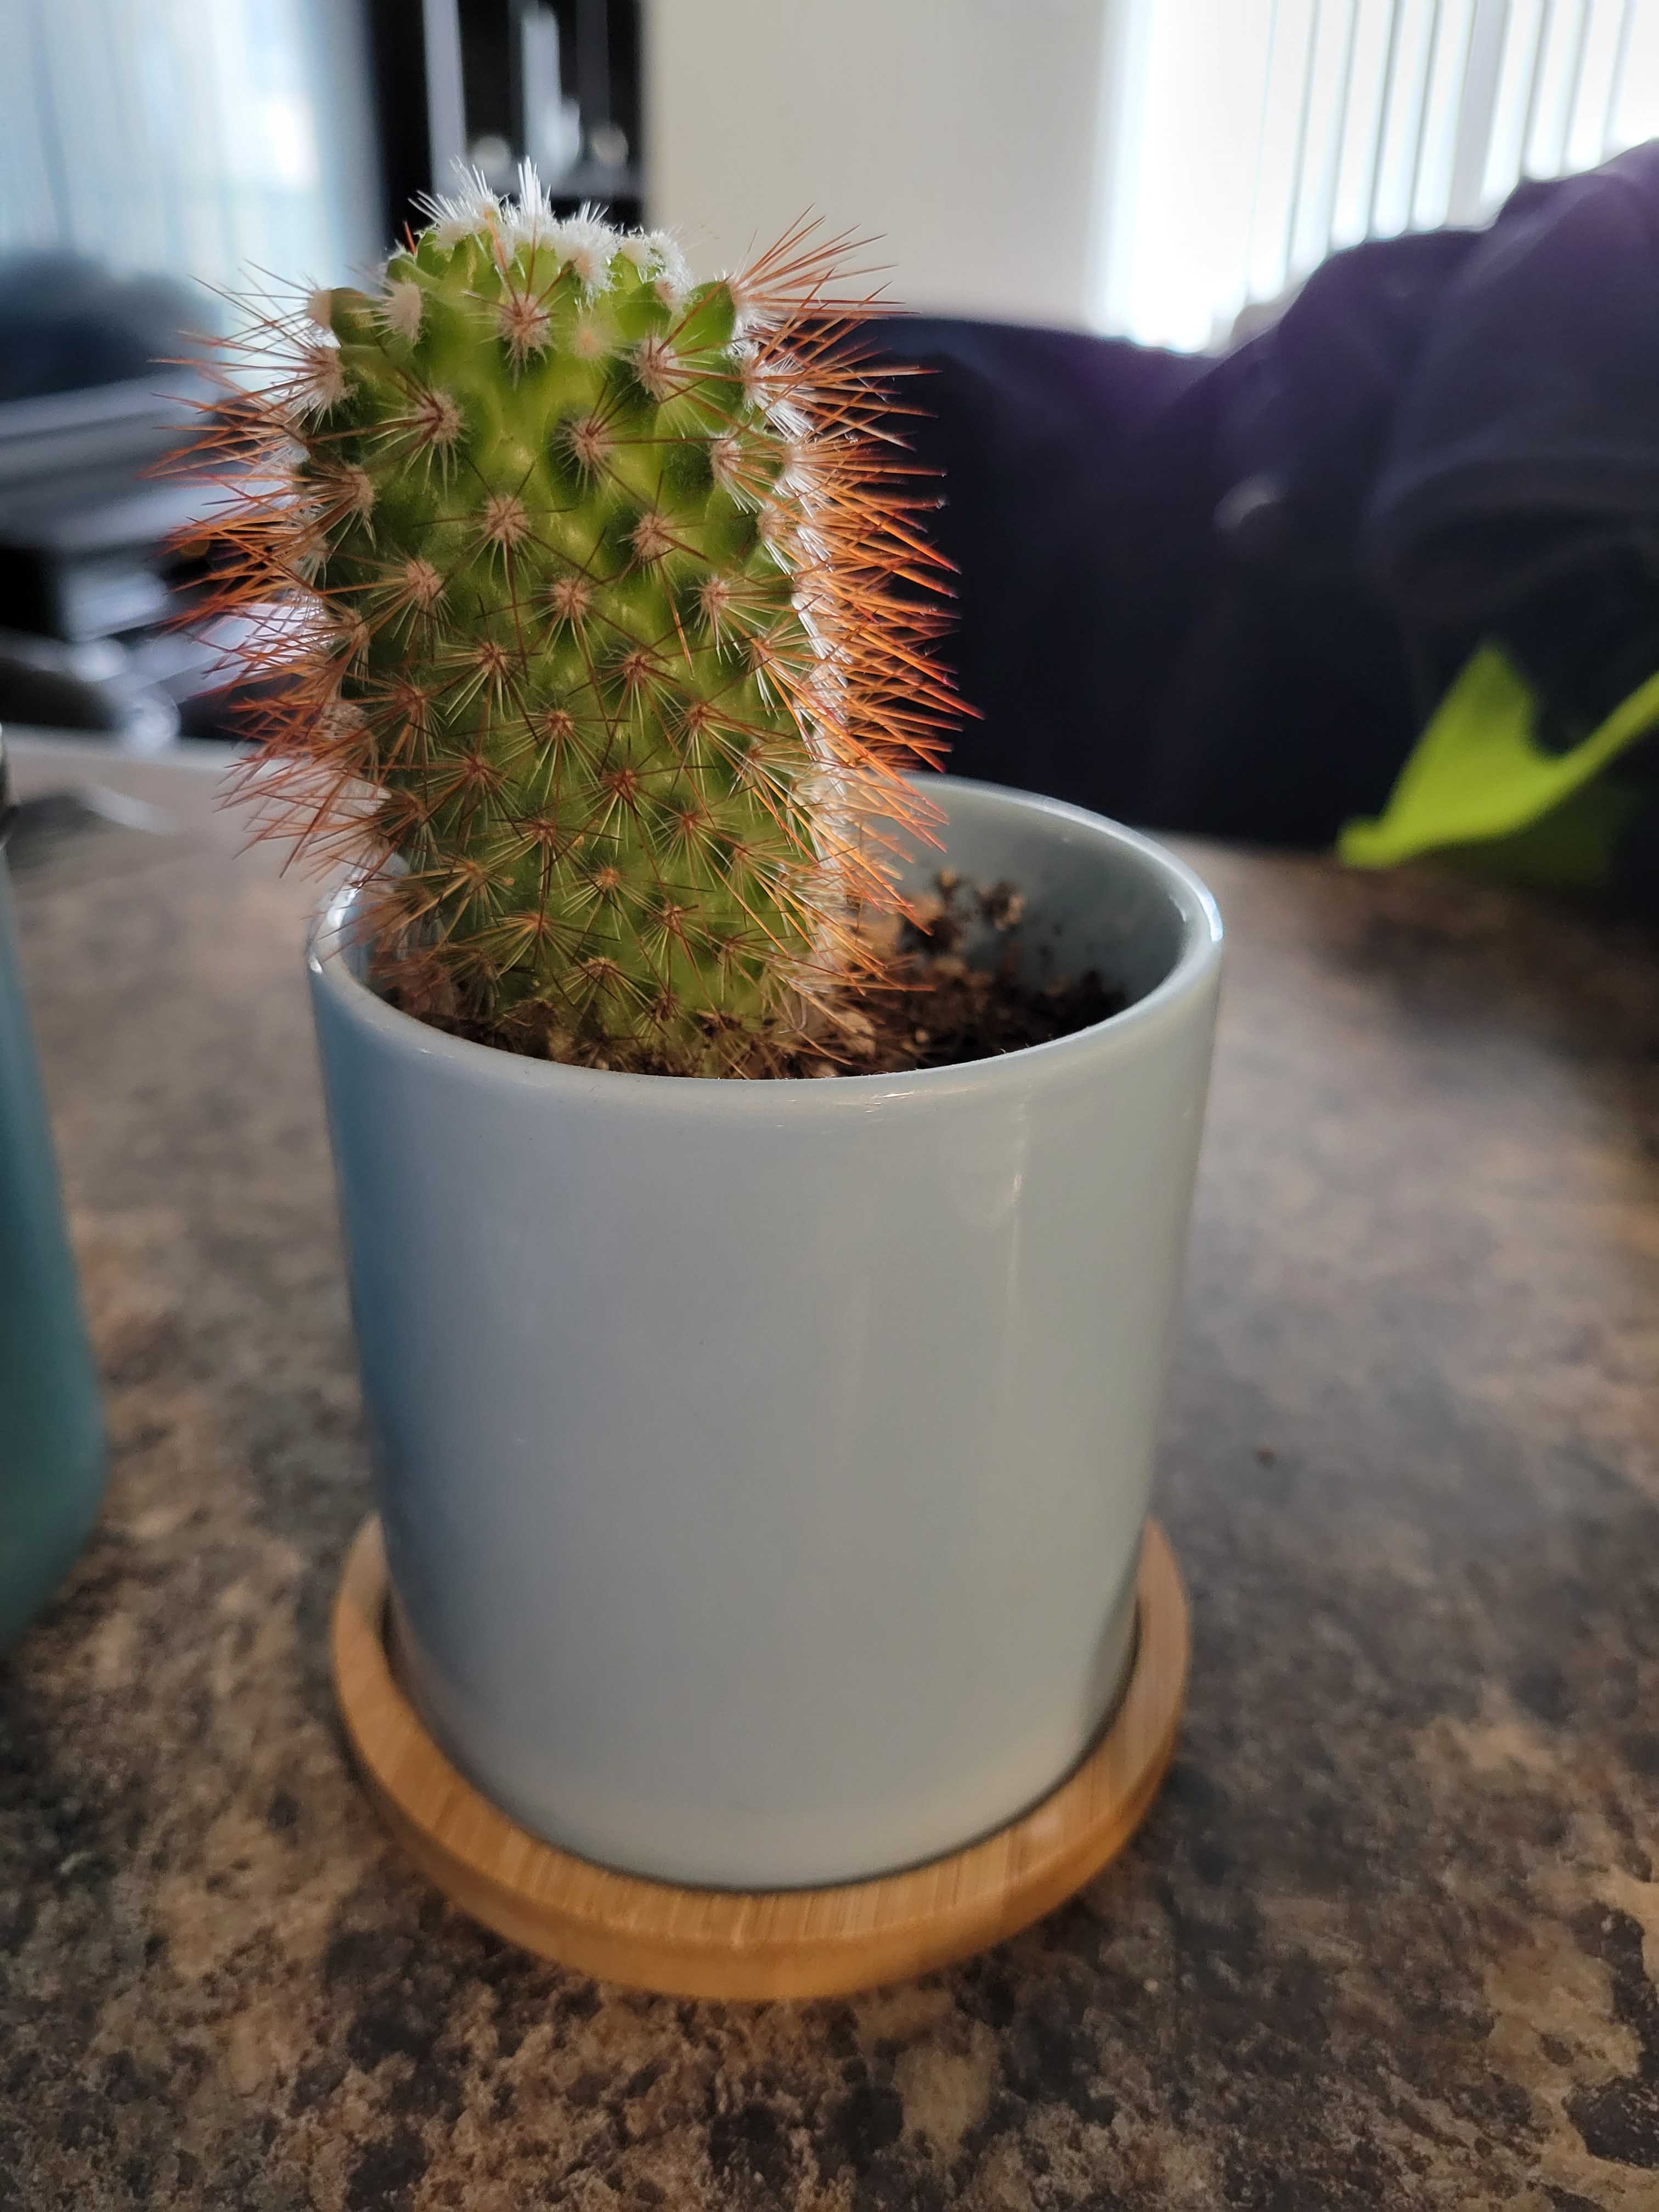 Christine's cactus